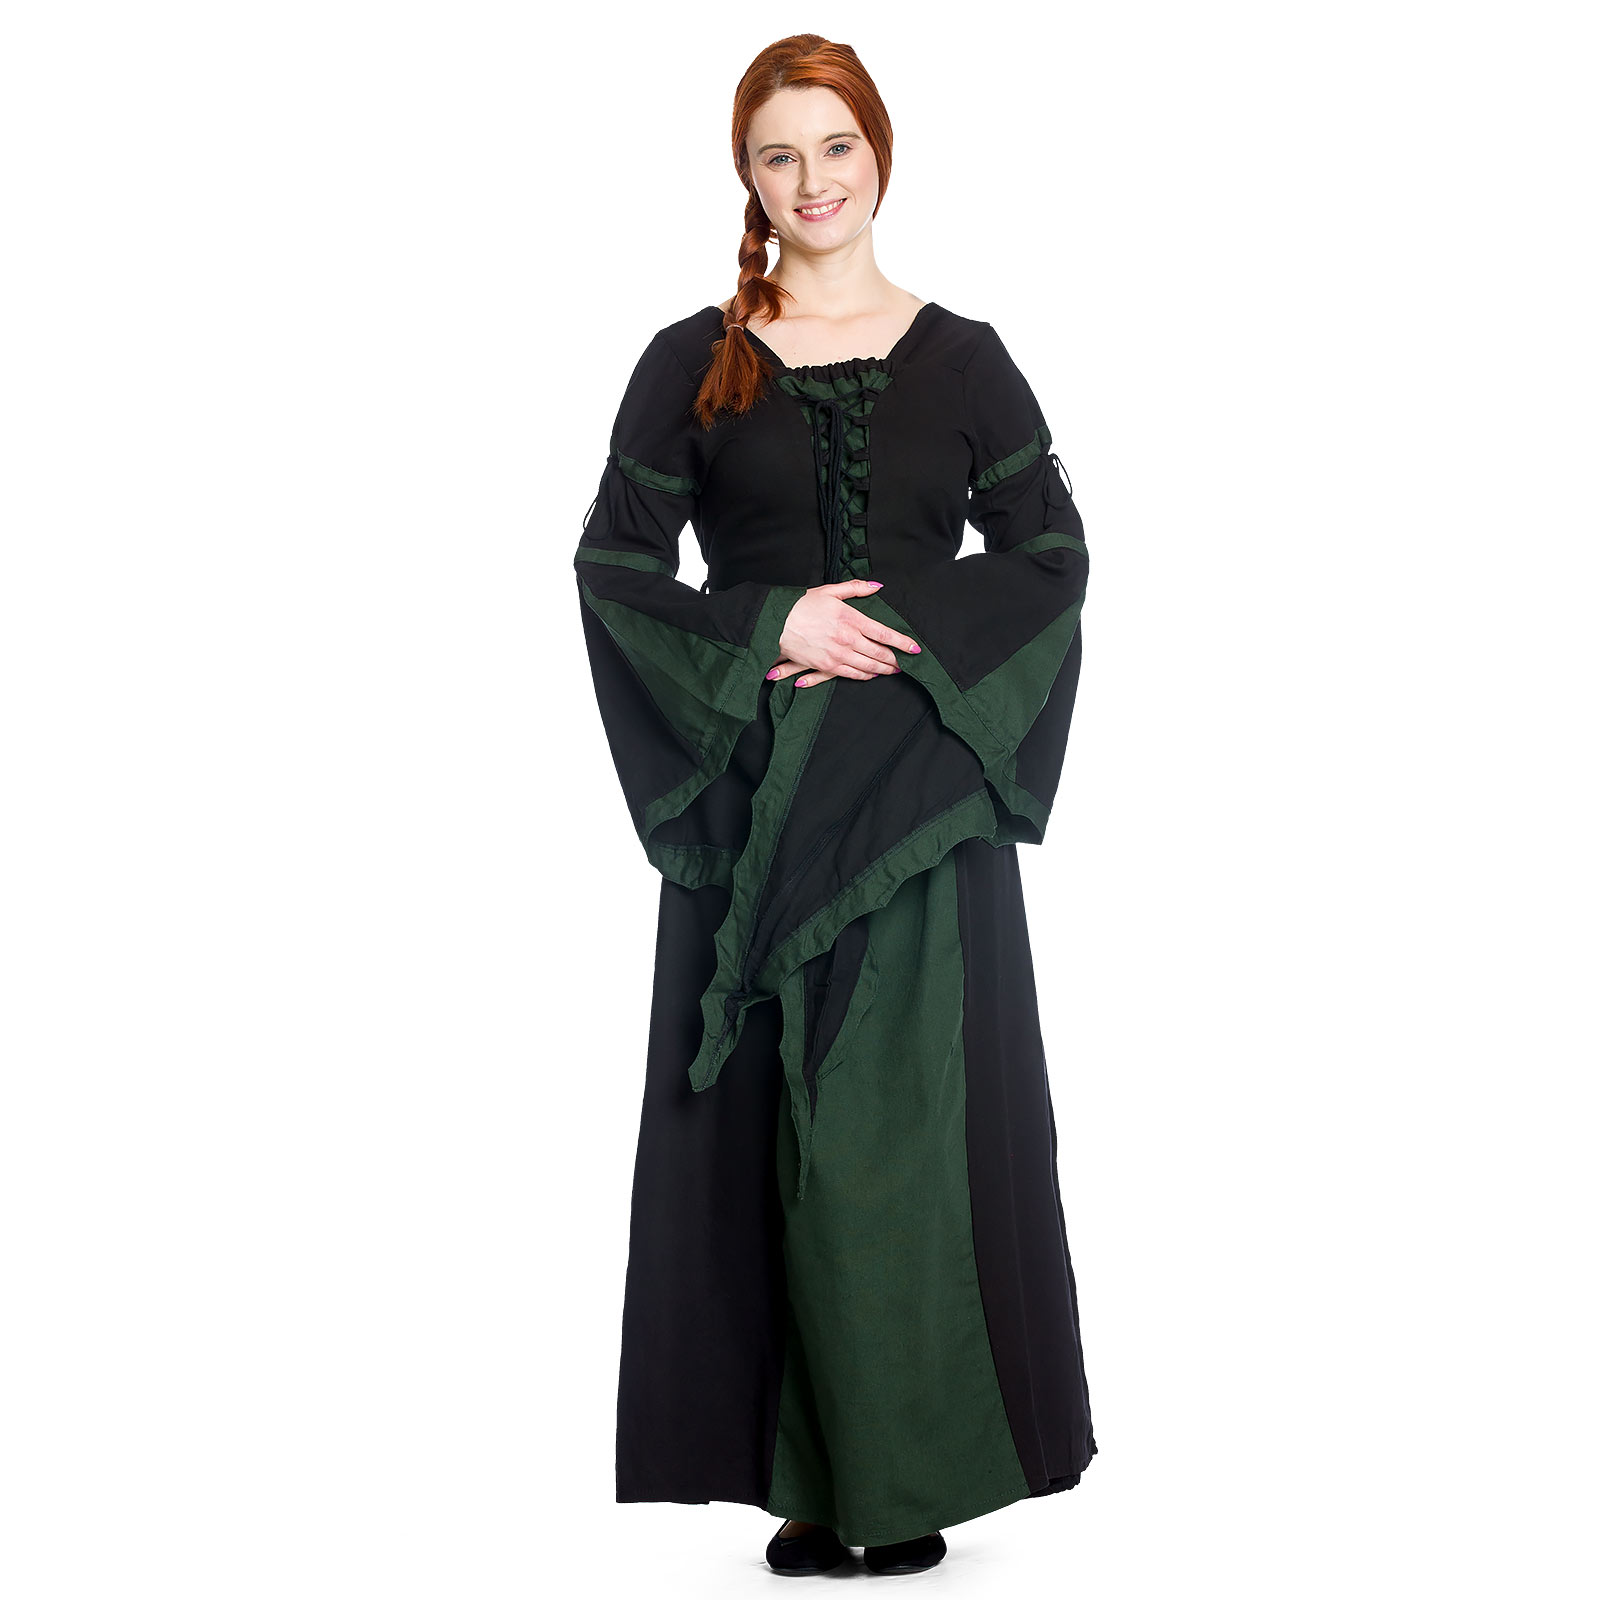 Leona - Mittelalterkleid schwarz-grün